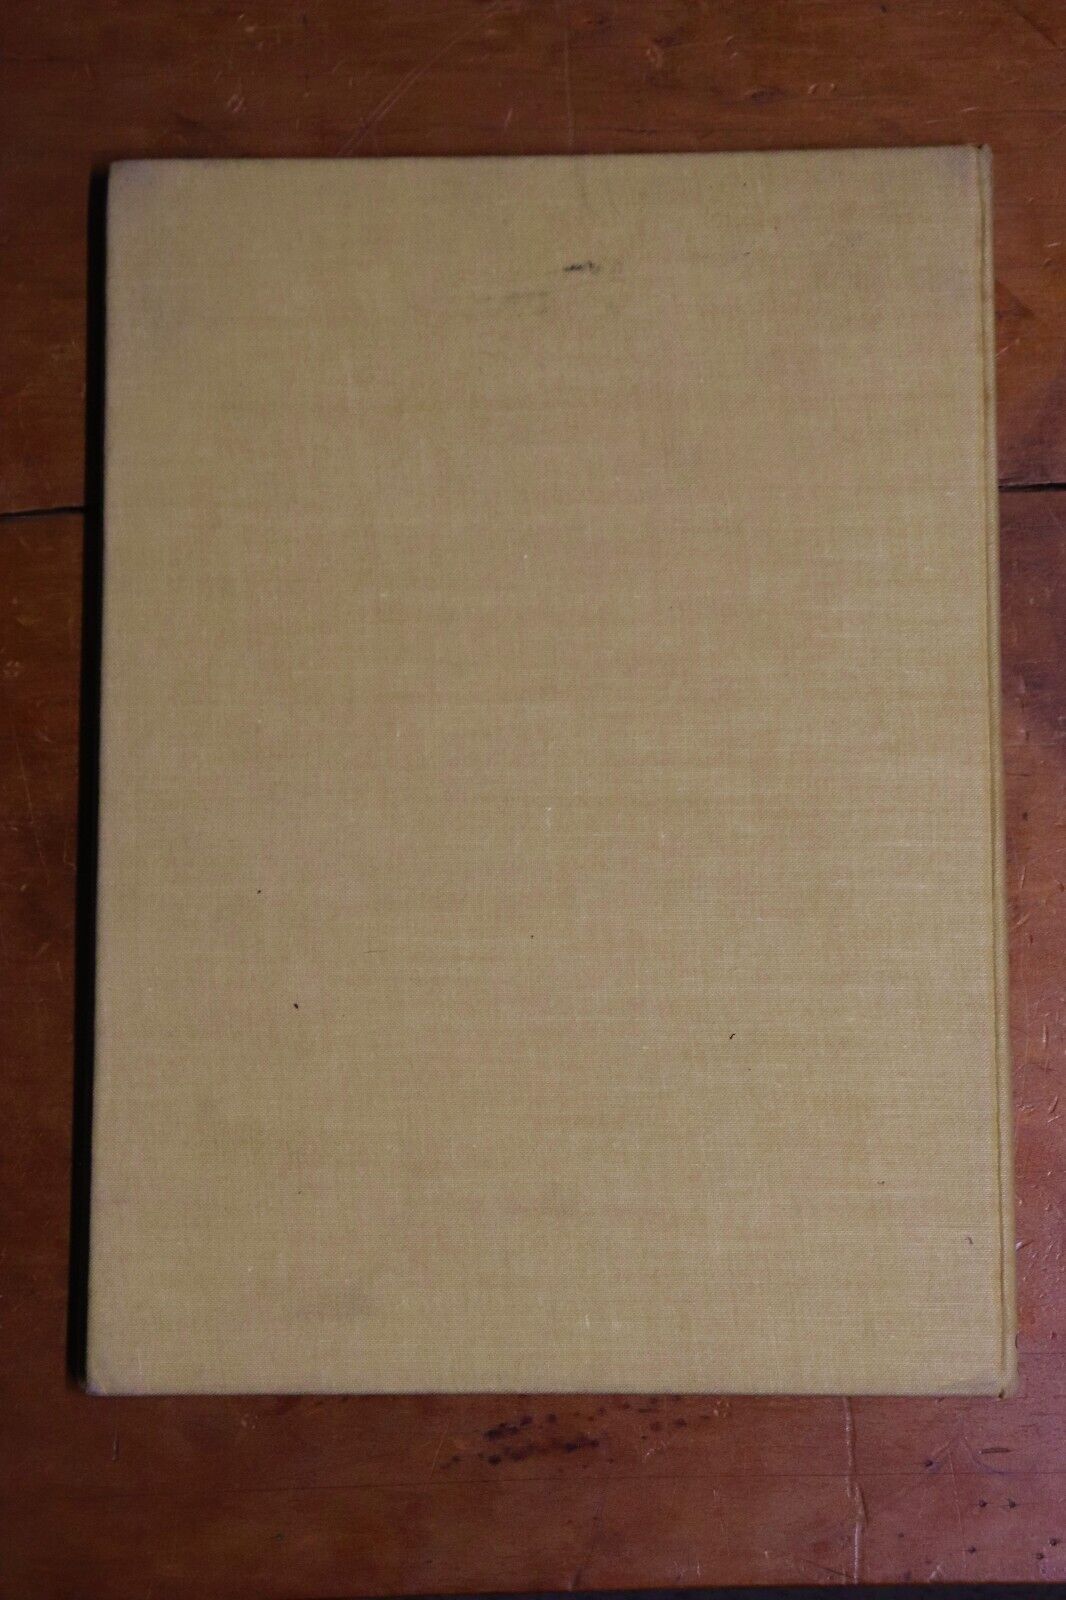 The Surrey Hills by WA Poucher - 1949 - Antique British History Book